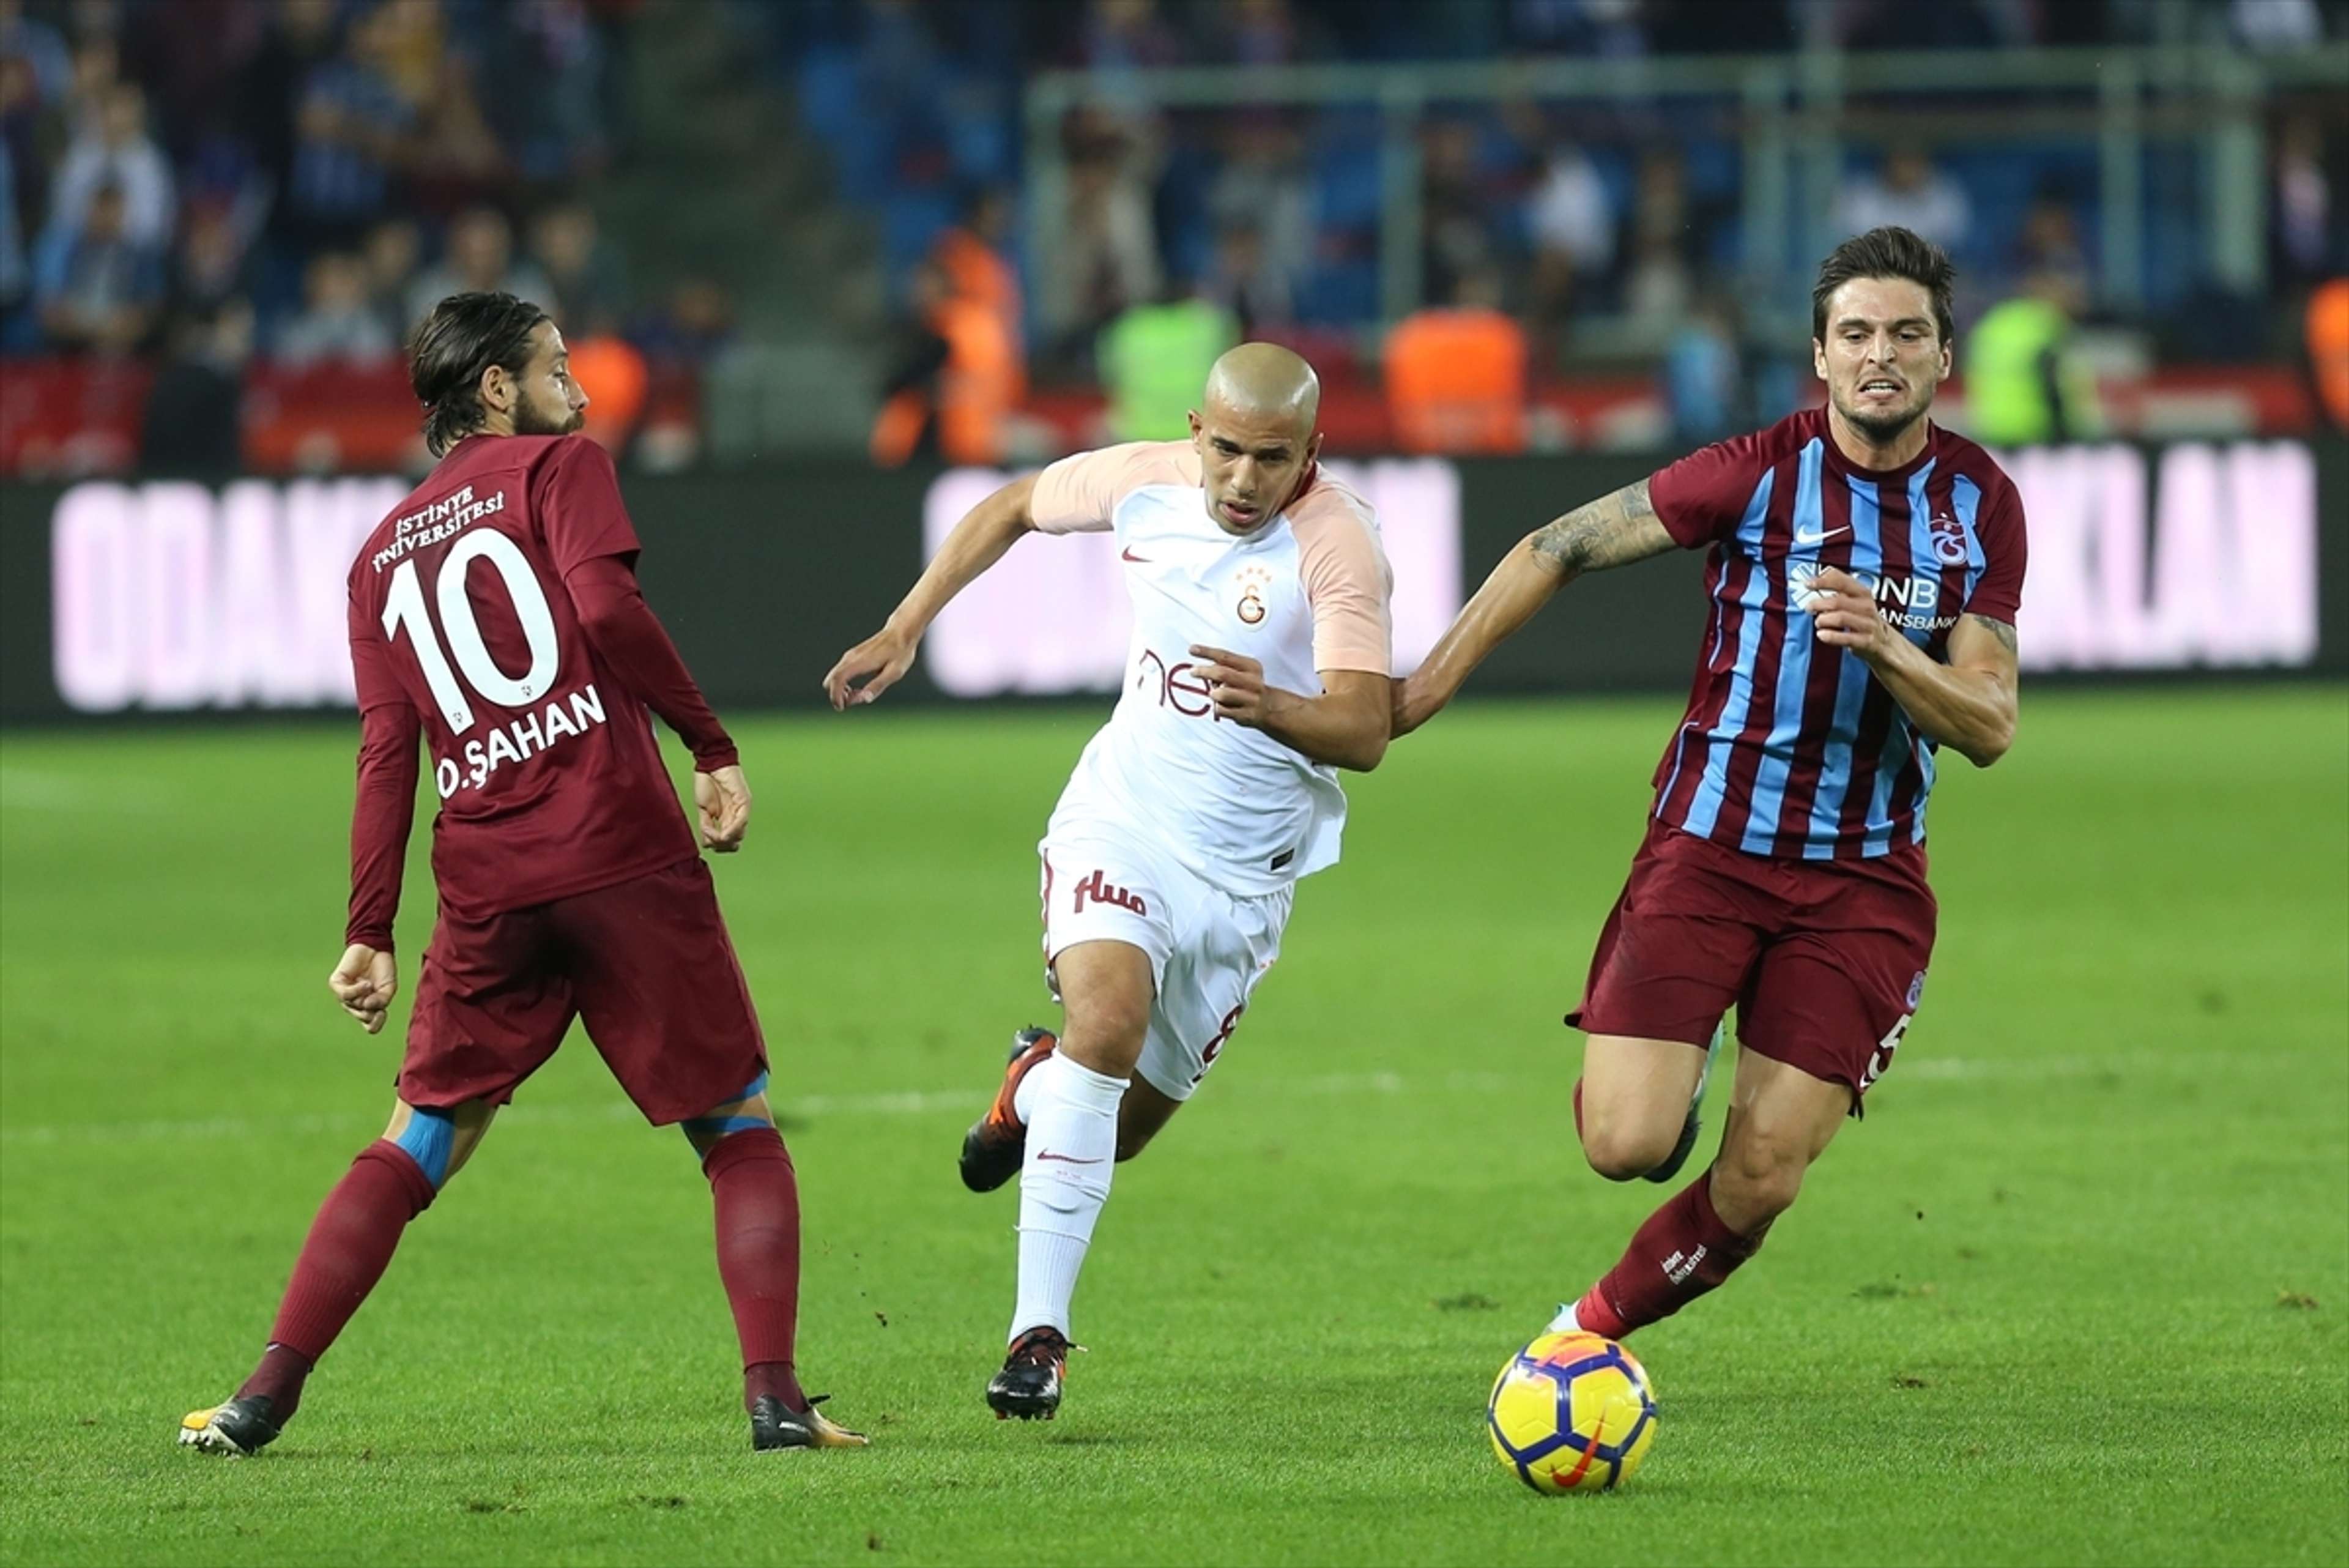 Trabzonspor Galatasaray Olcay Sahan Okay Yokuslu Sofiane Feghouli 10/29/17